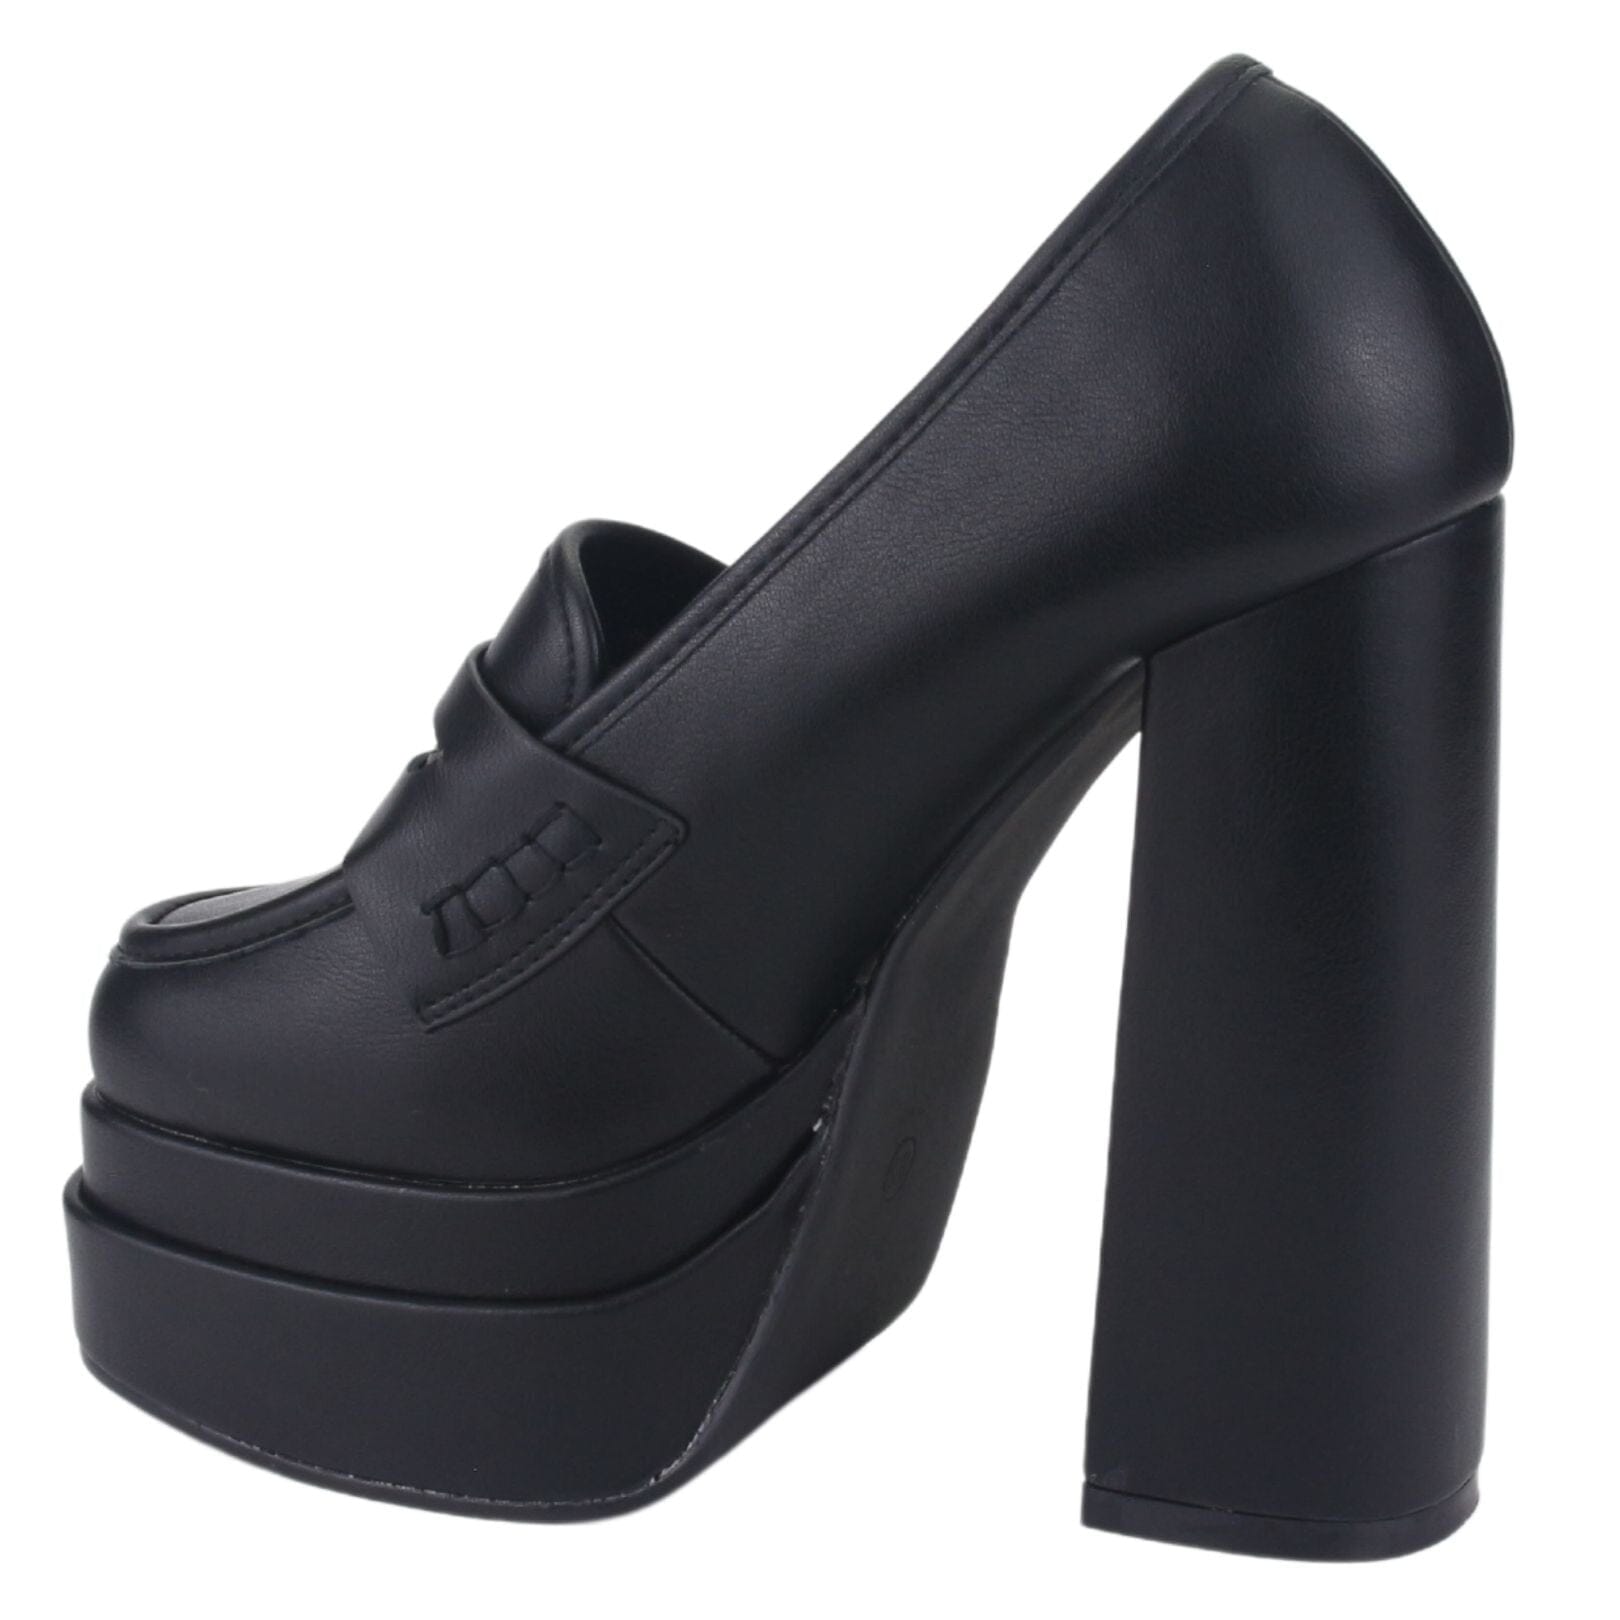 Zapato Chalada Mujer Dream-4 Negro Casual Tacones Altos Chalada 